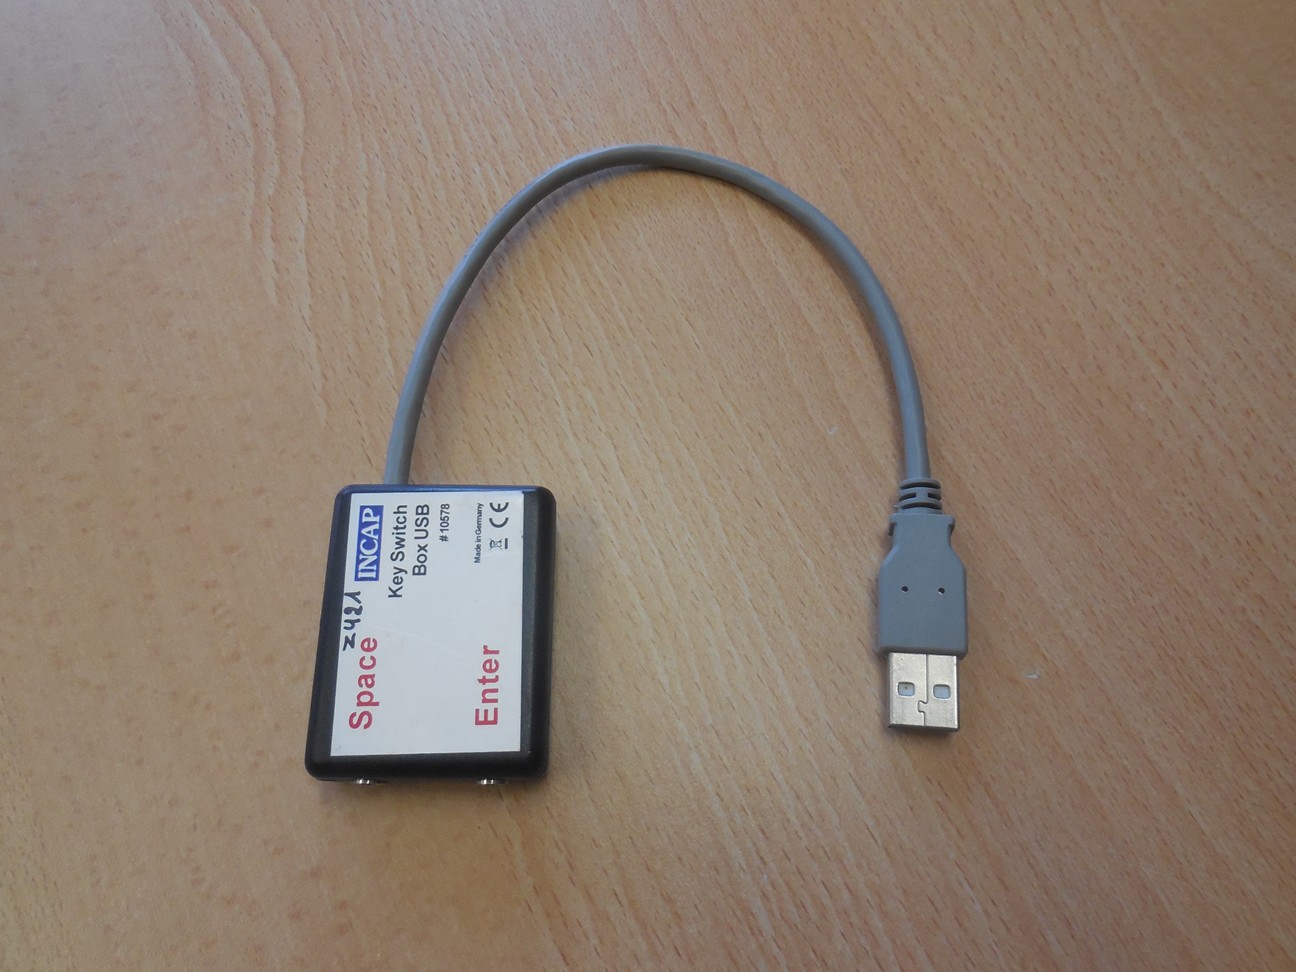 USB muisschakelkast